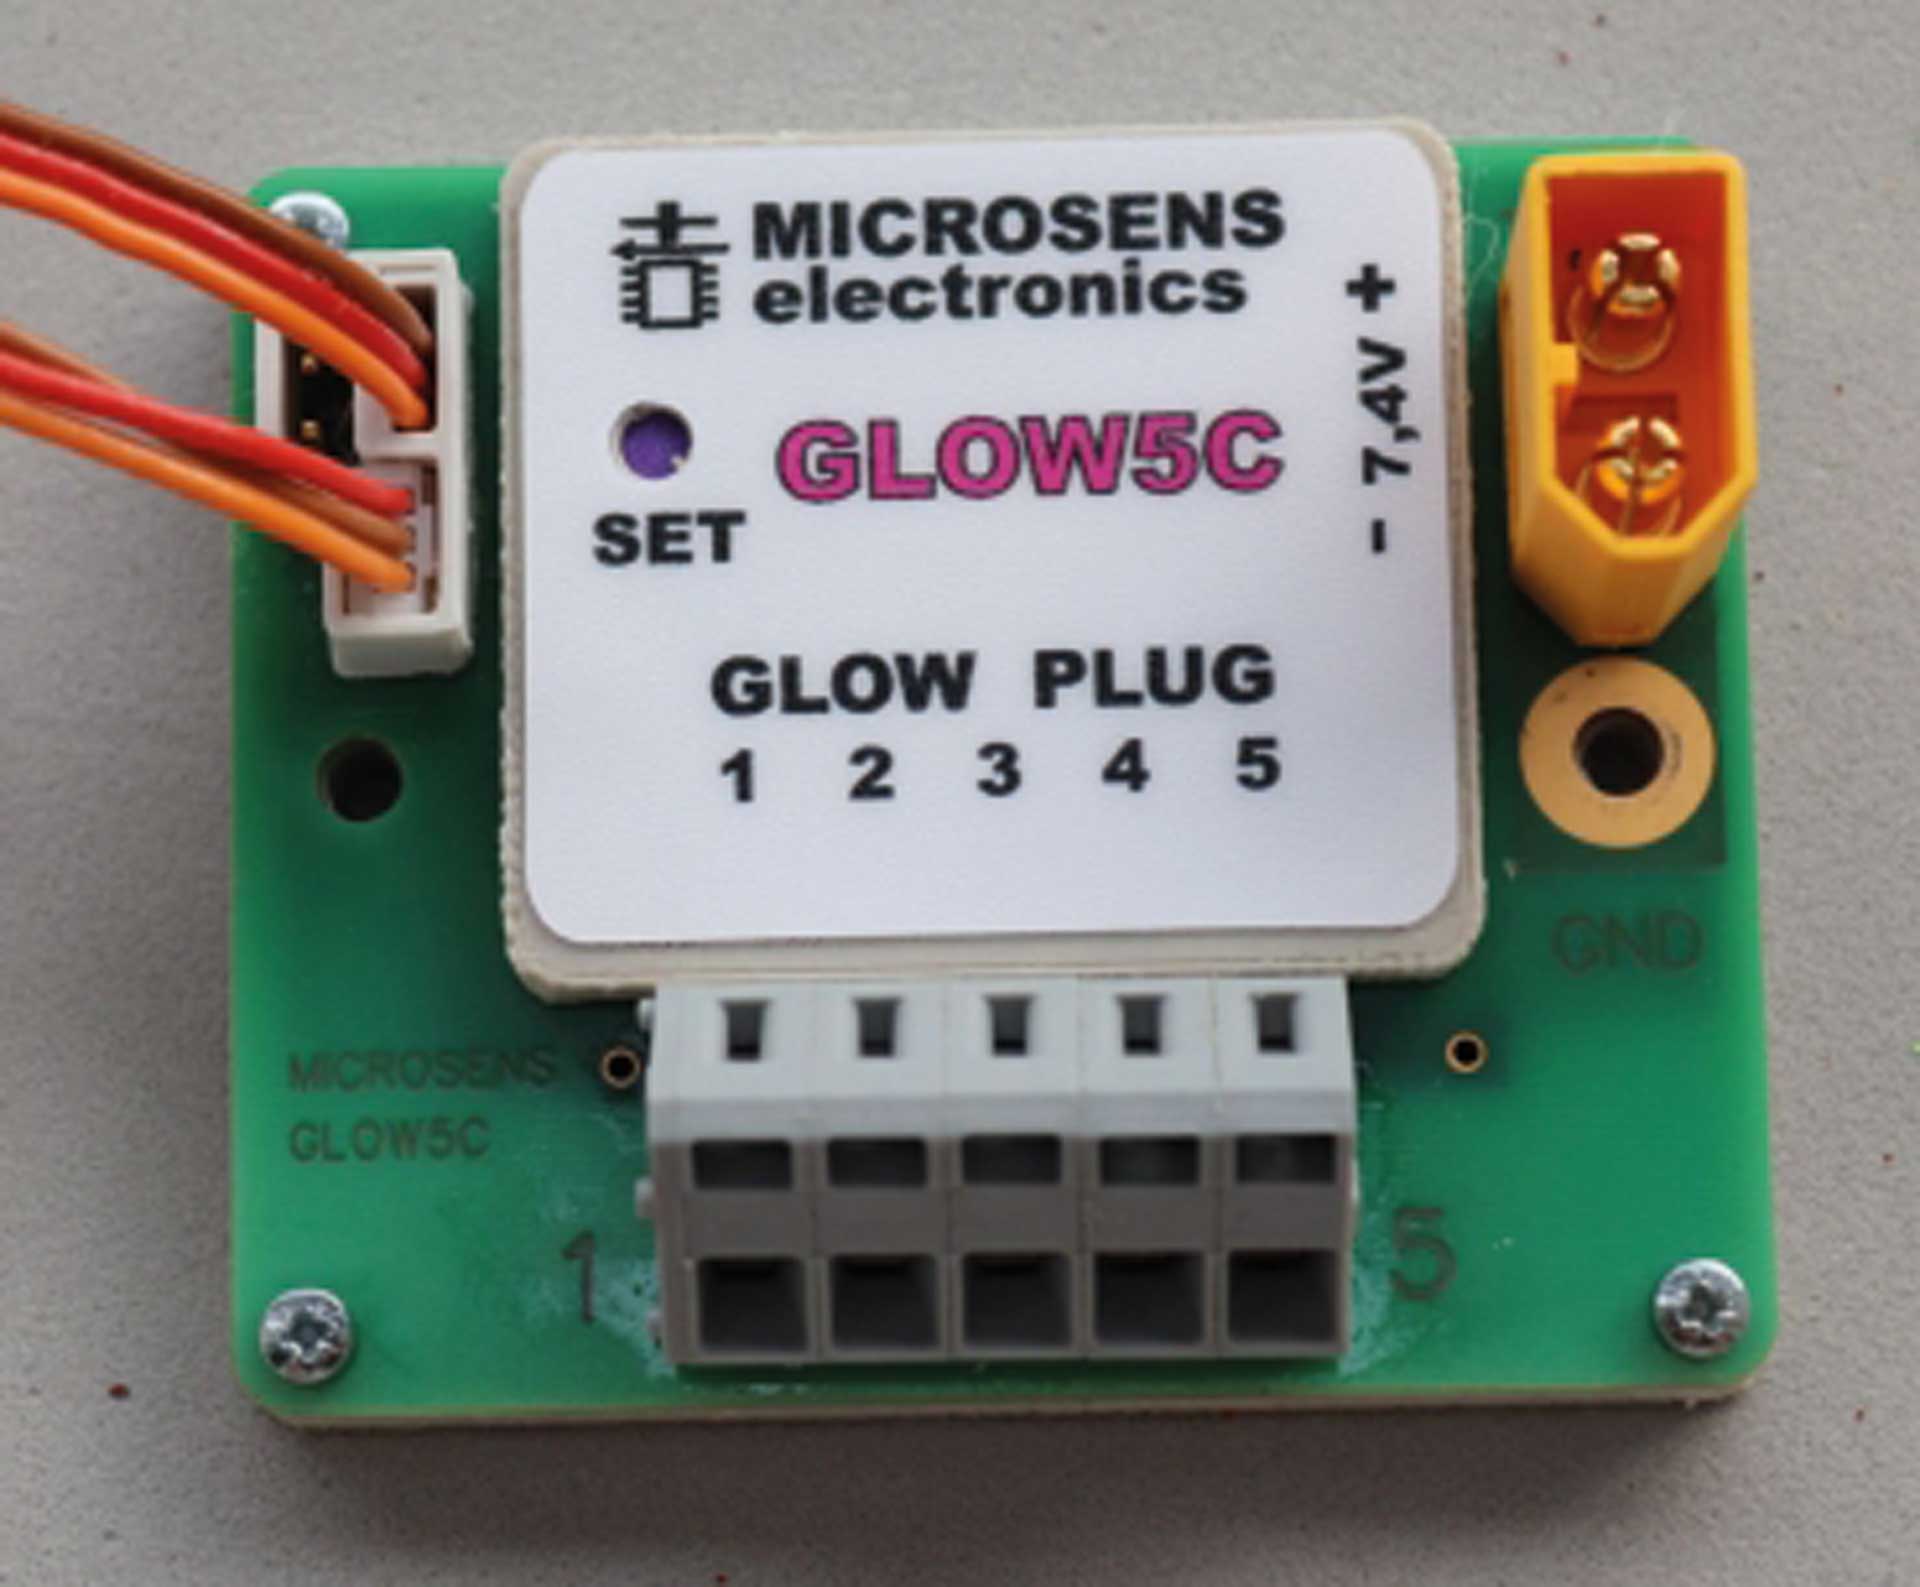 MICROSENS GLOW 5C